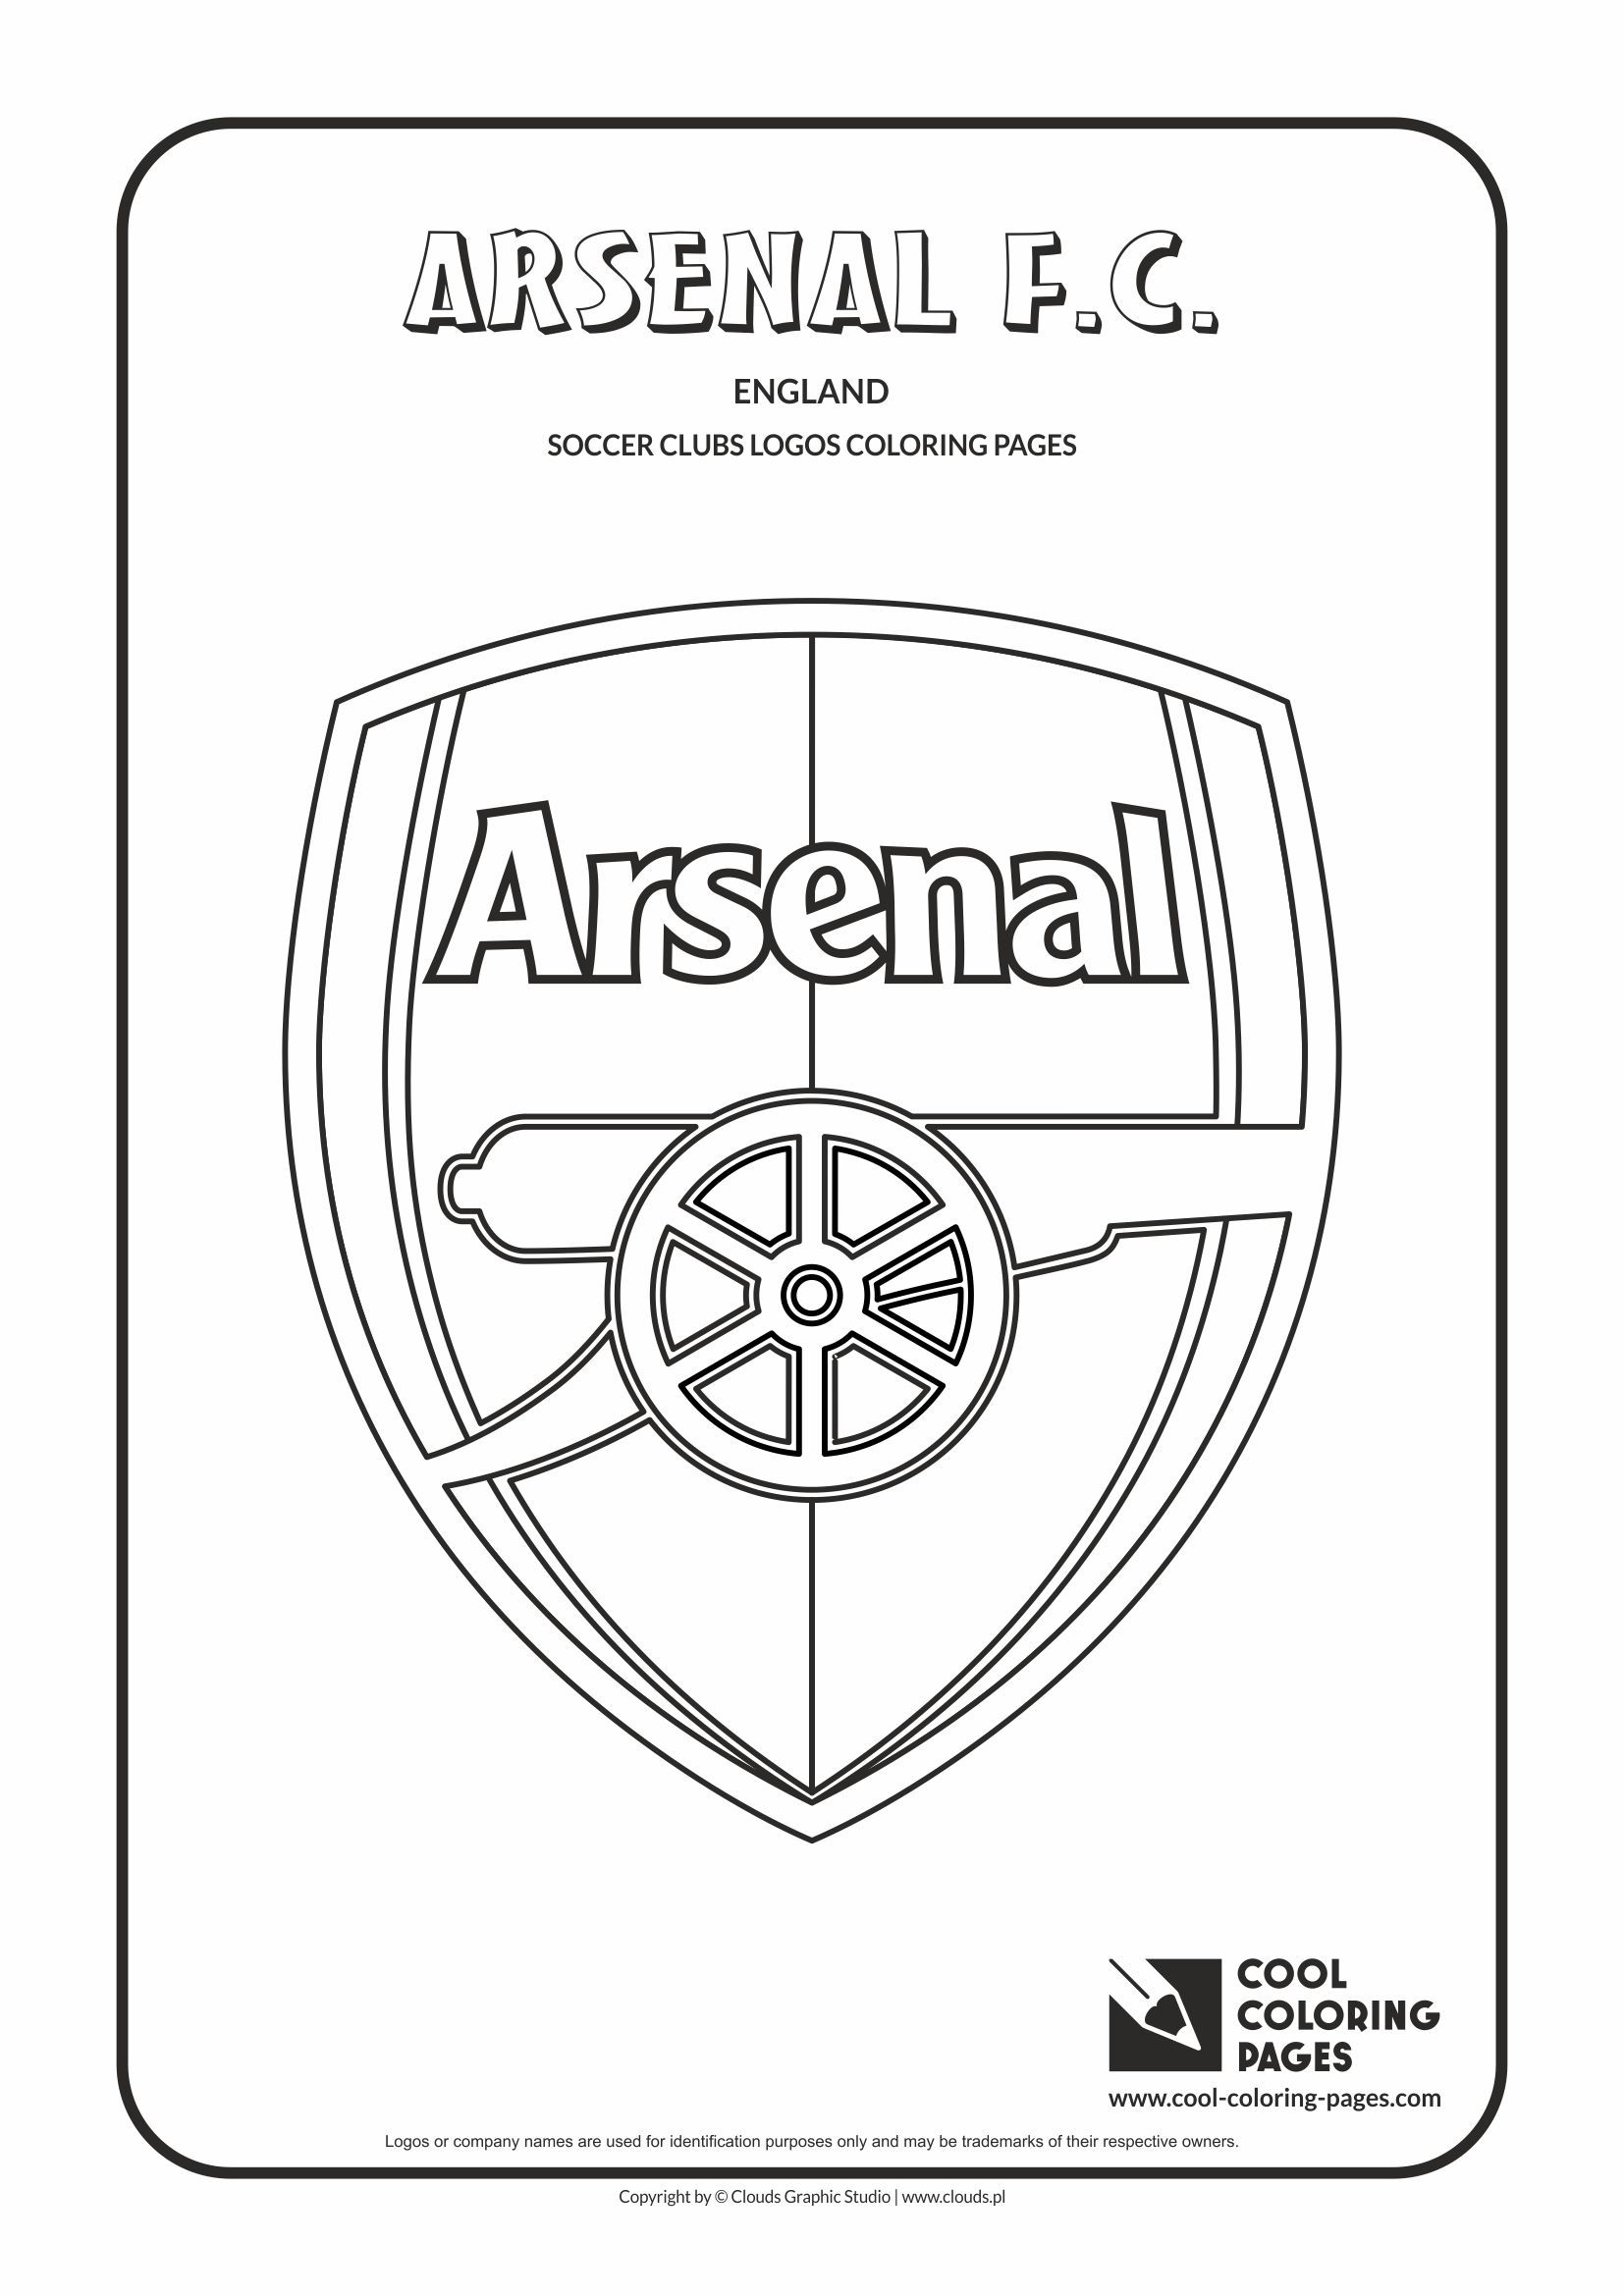 Arsenal fc logo coloring page coloring pages football logo arsenal